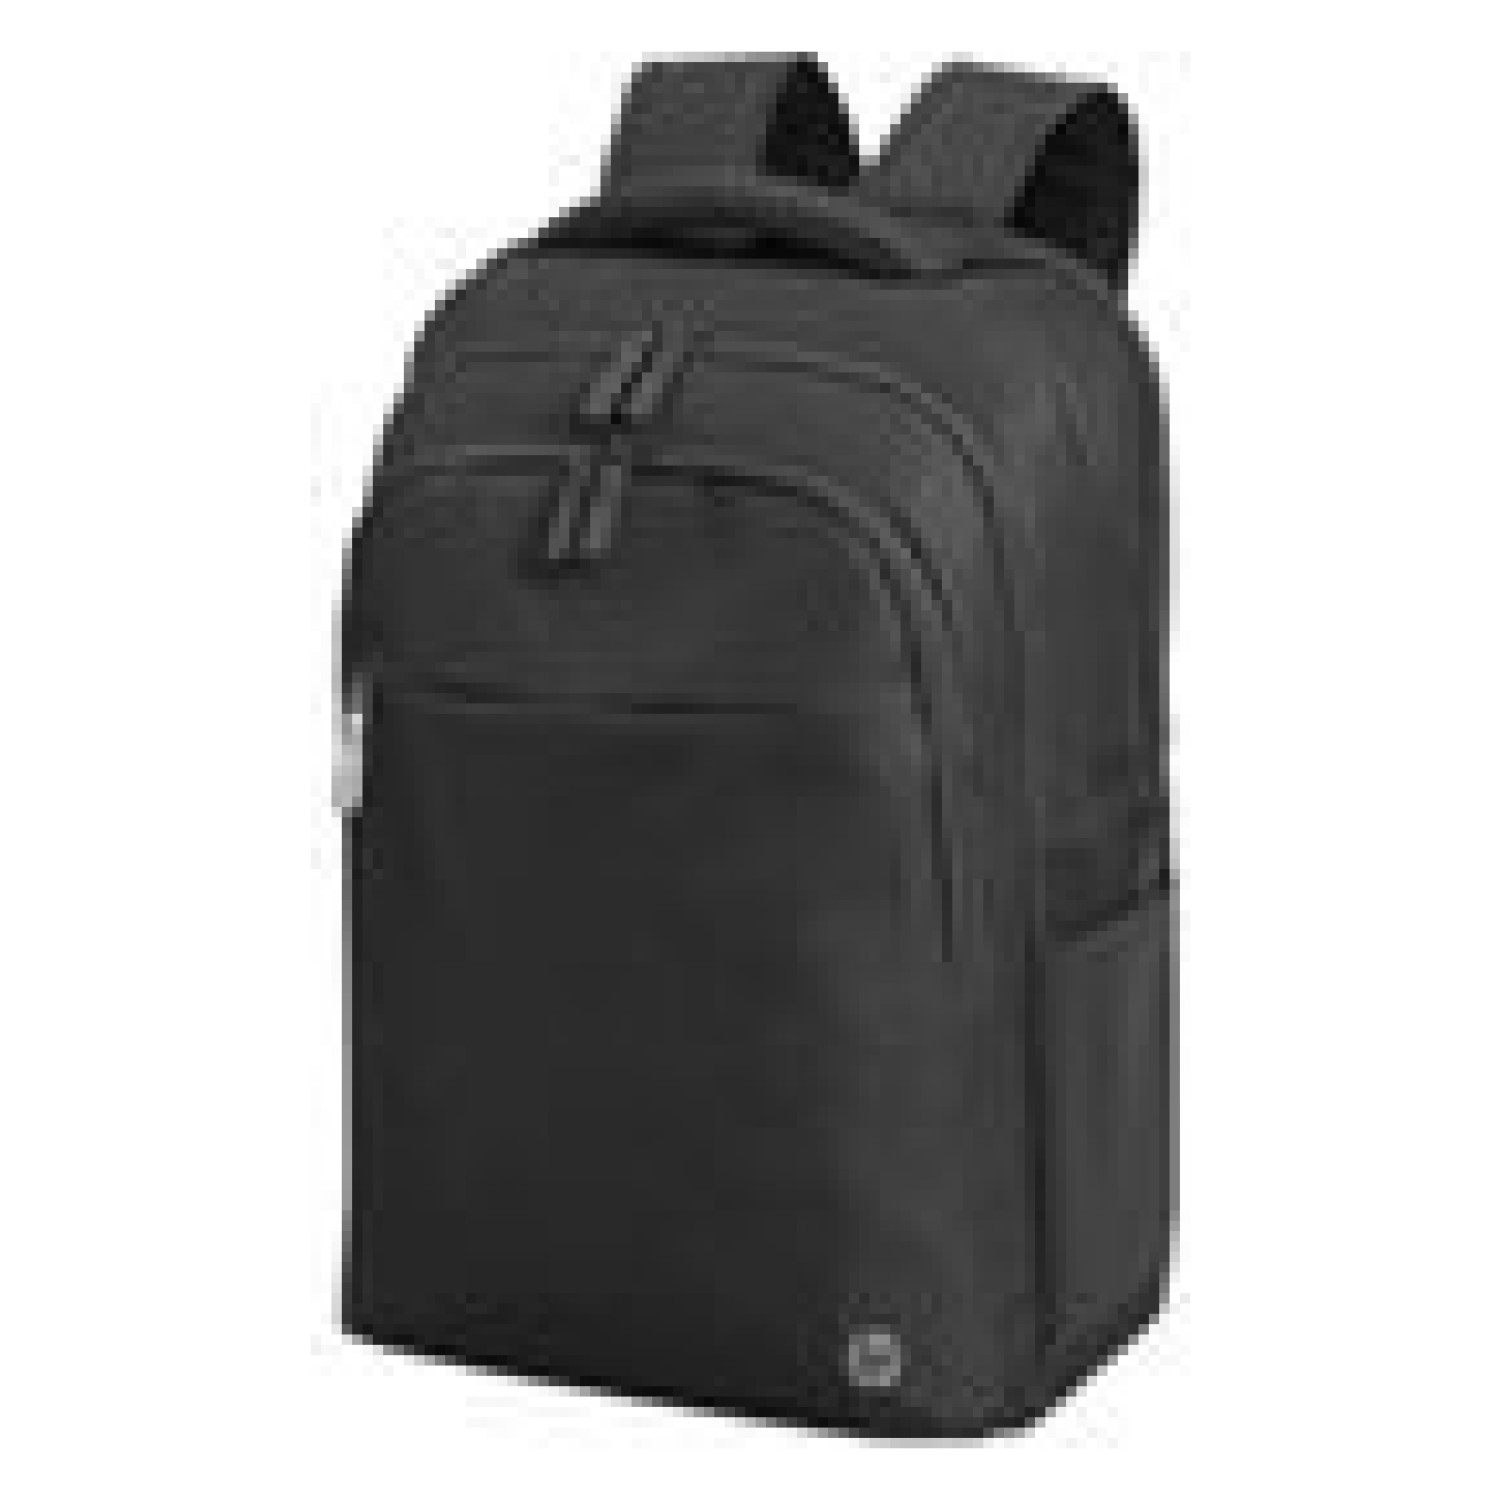 HP Rnw Business 17.3i Laptop Backpack